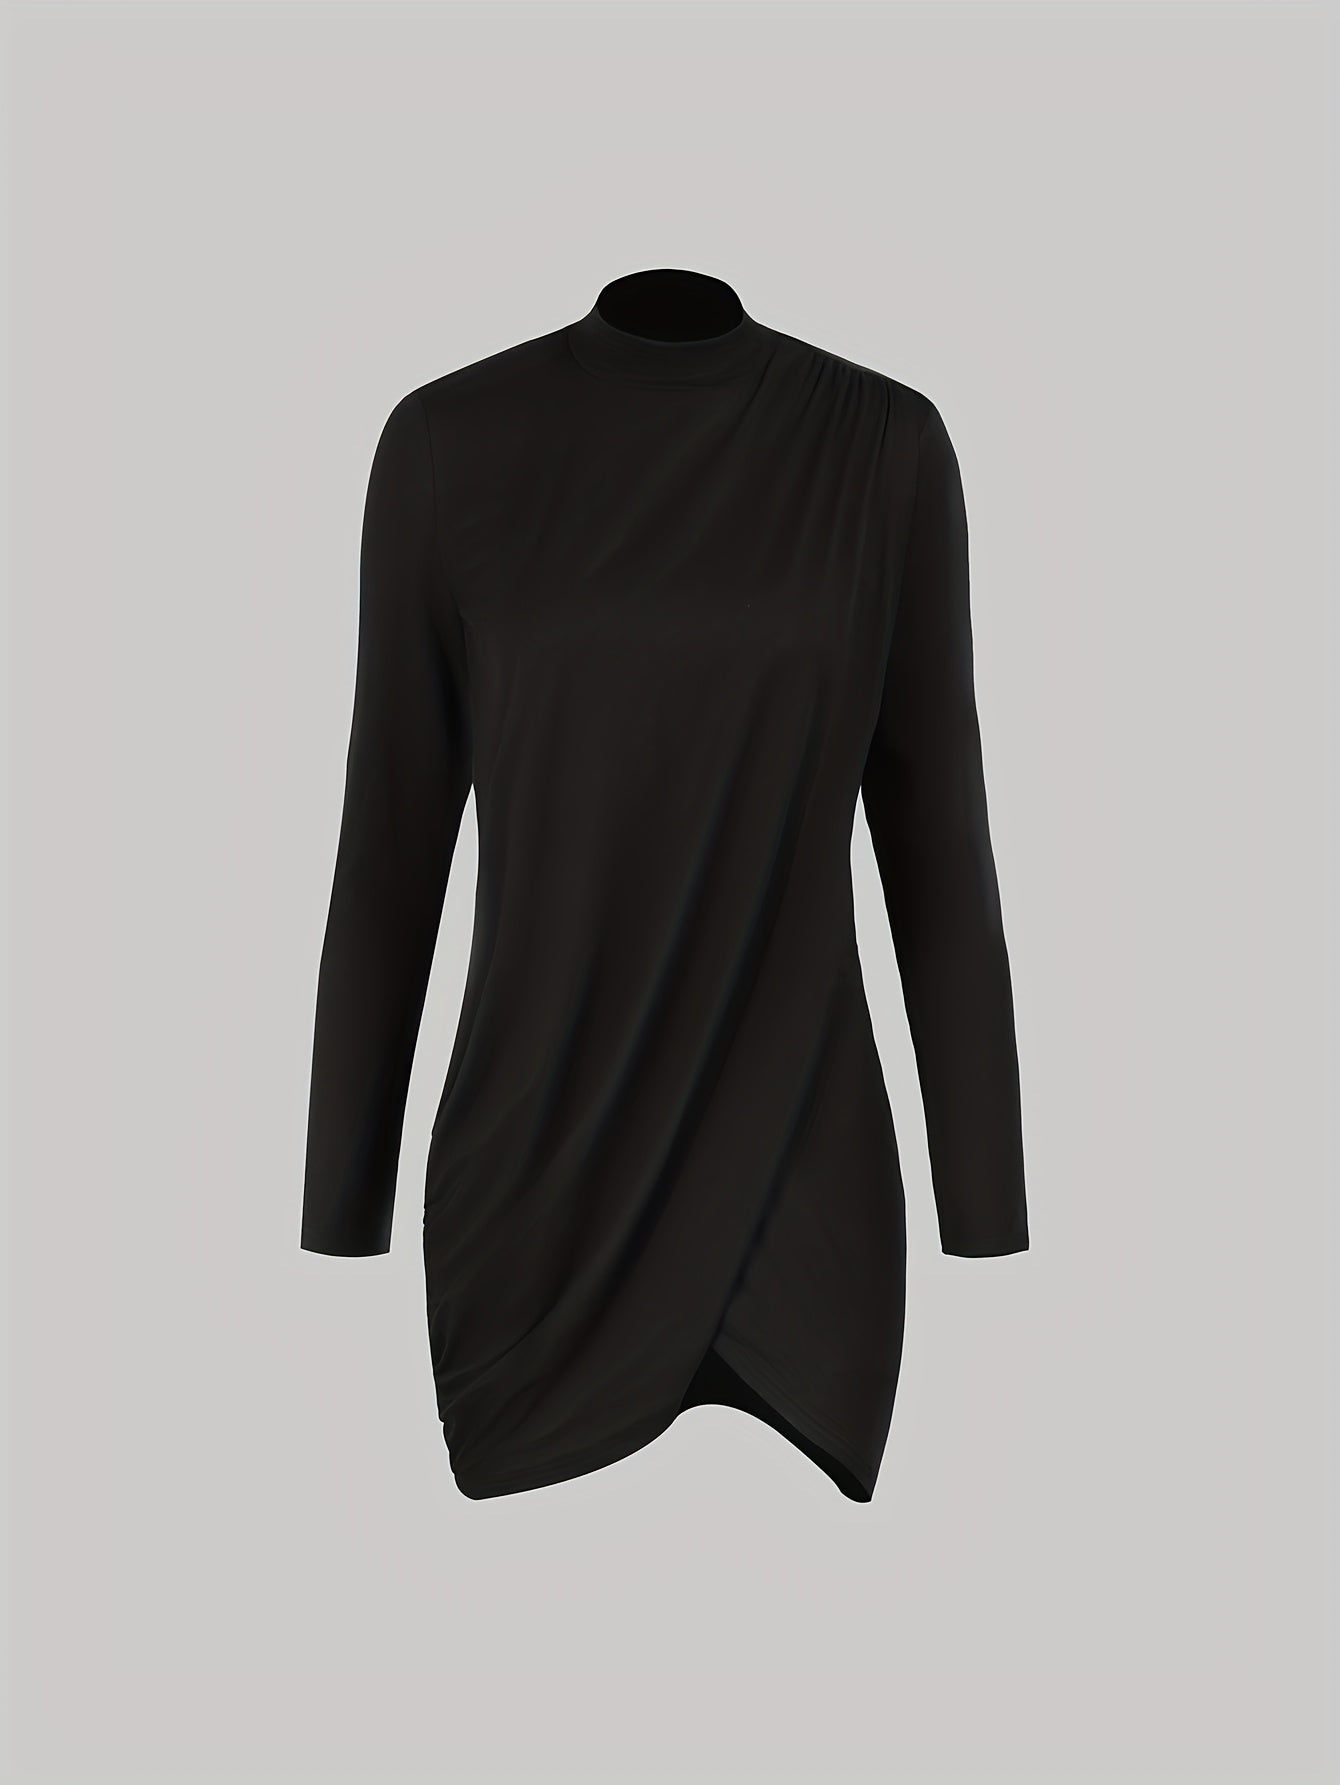 Antmvs Solidcolor Mock Neck Wrap Dress, Elegant Long Sleeve Dress For Spring & Fall, Women's Clothing